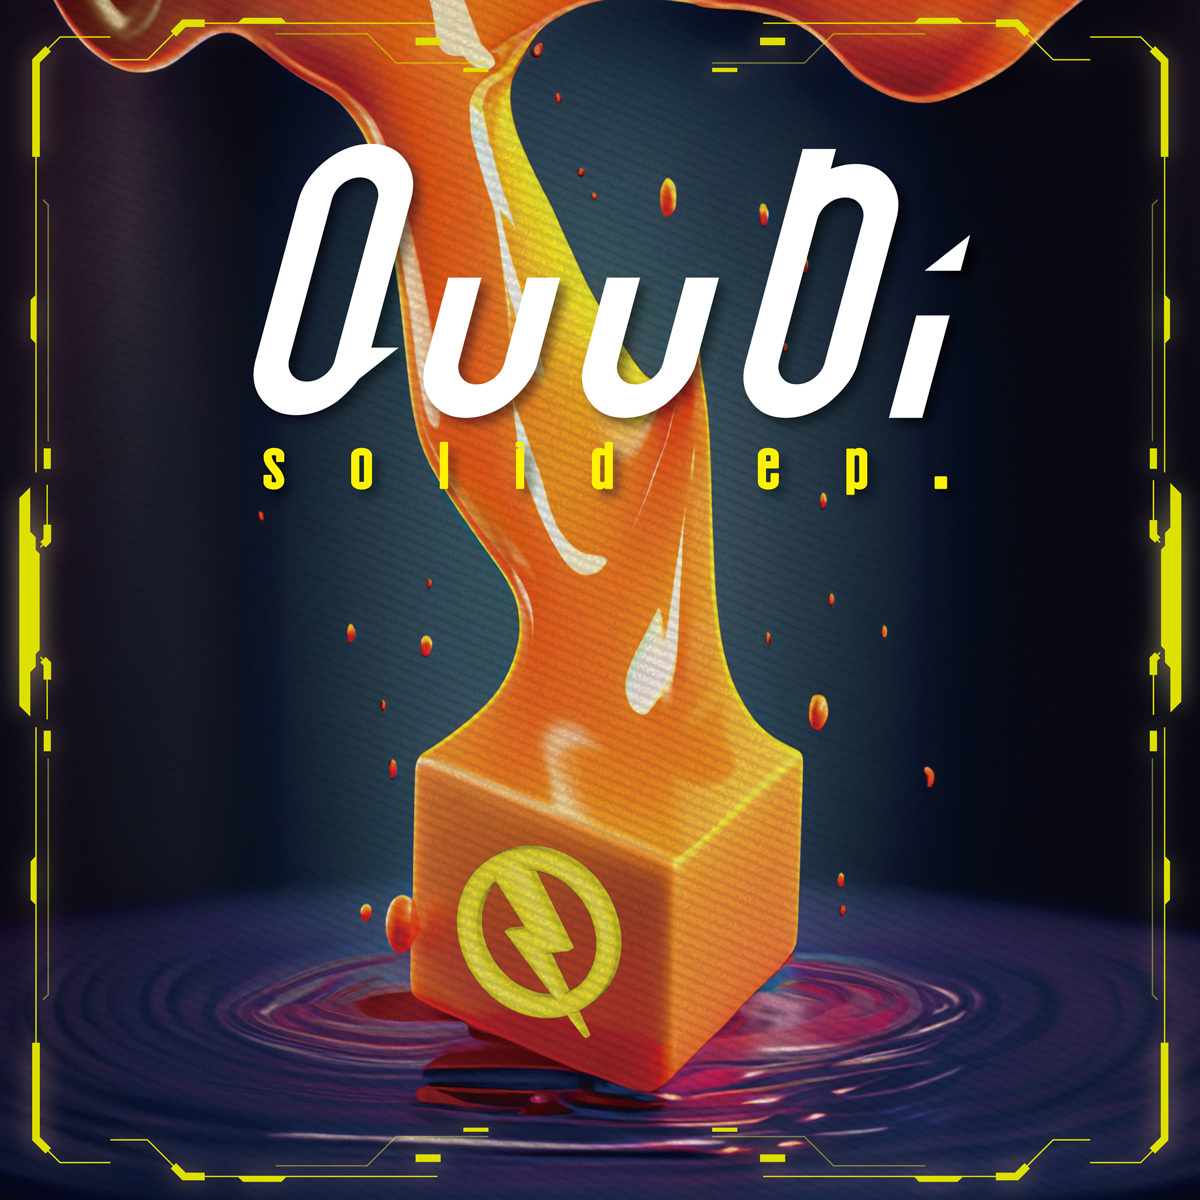 Quubi 1st EP「solid ep.」初回限定盤ジャケット